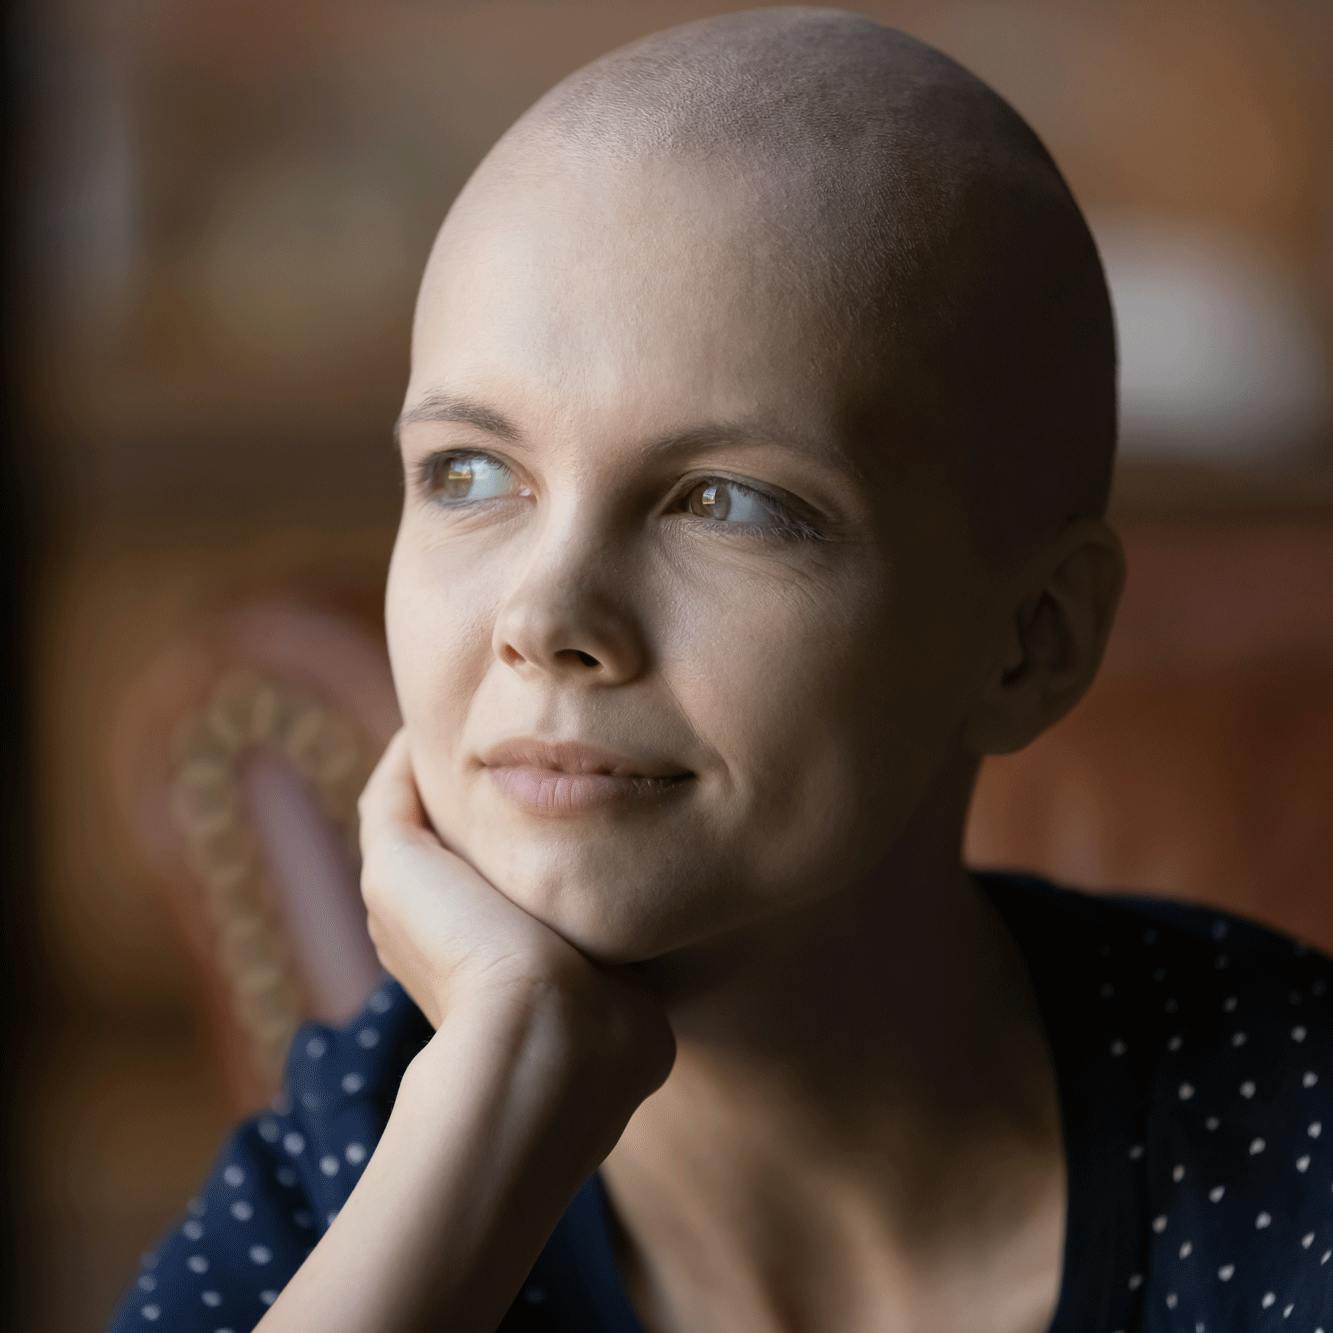 Kemoterapi: Sådan påvirker kemobehandling din krop